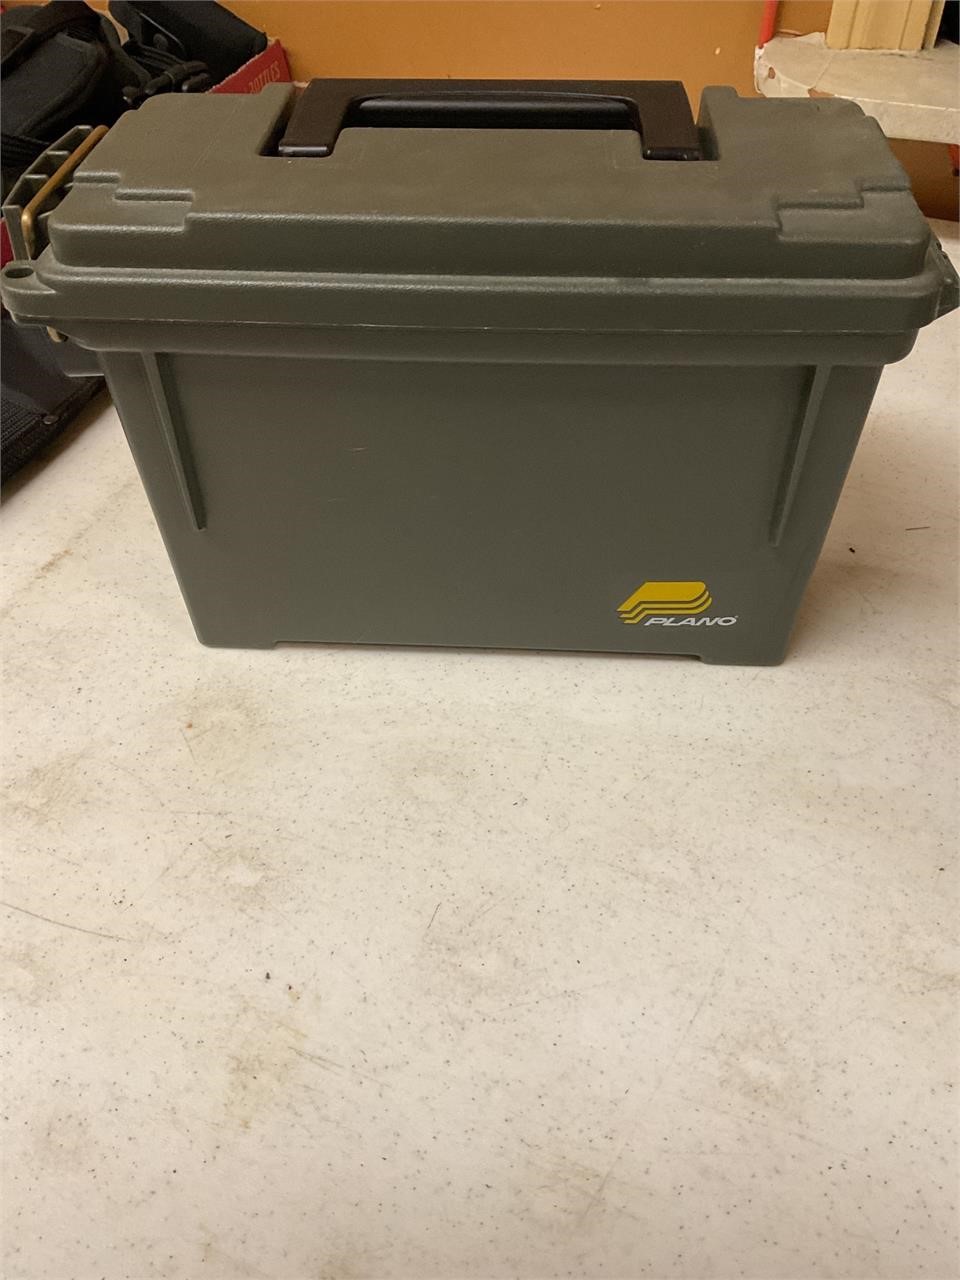 Plano ammunition box